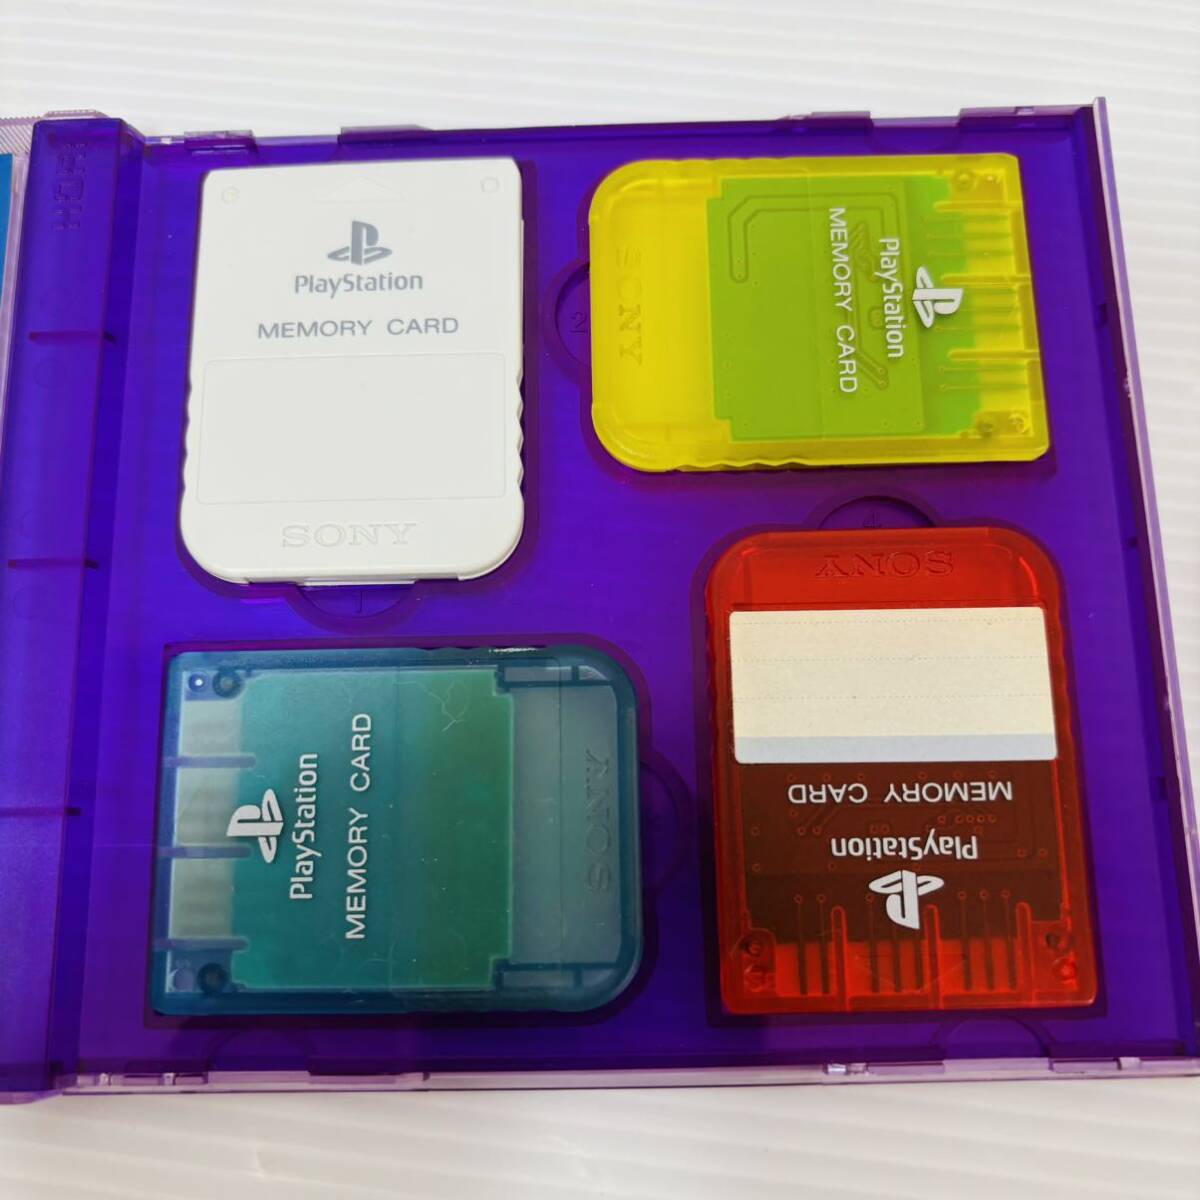  продажа комплектом карта памяти 8MB PlayStation PlayStation 2 каркас прозрачный MEMORY CARD SONY Sony карта памяти комплект 